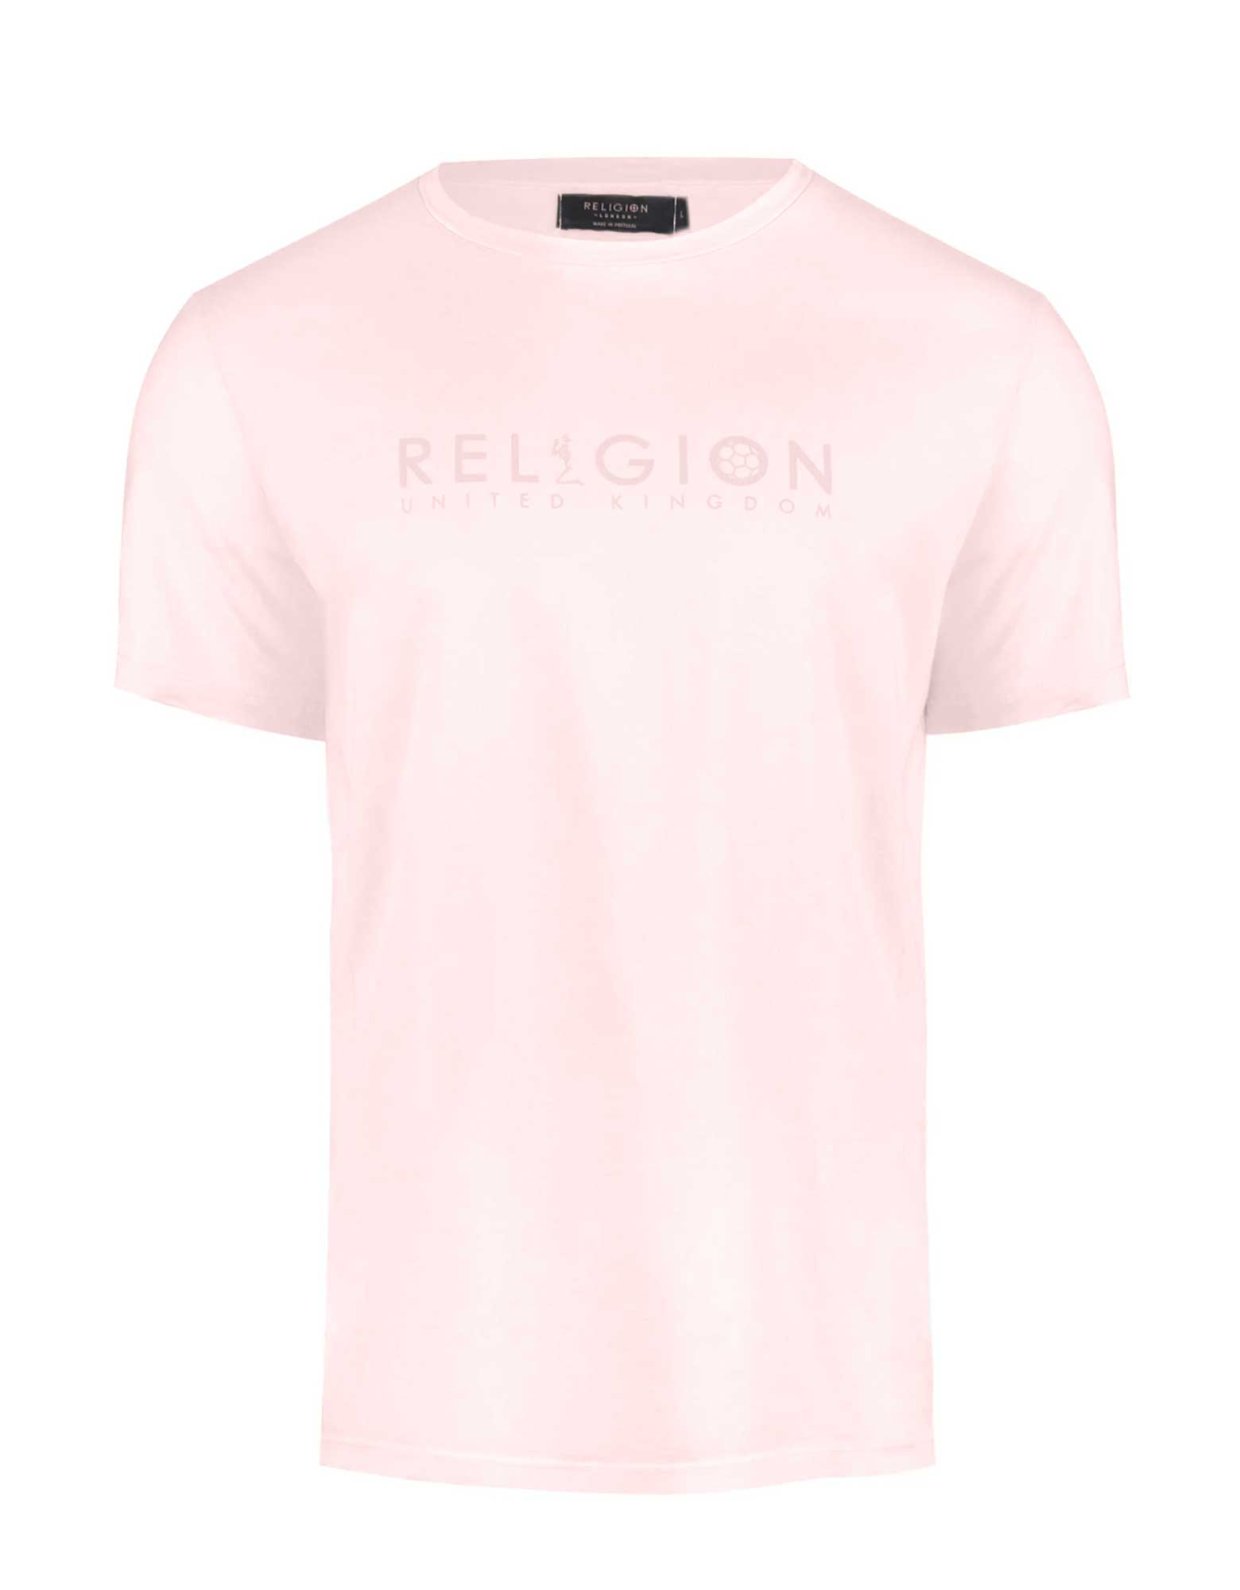 Religion UK football tee pale pink